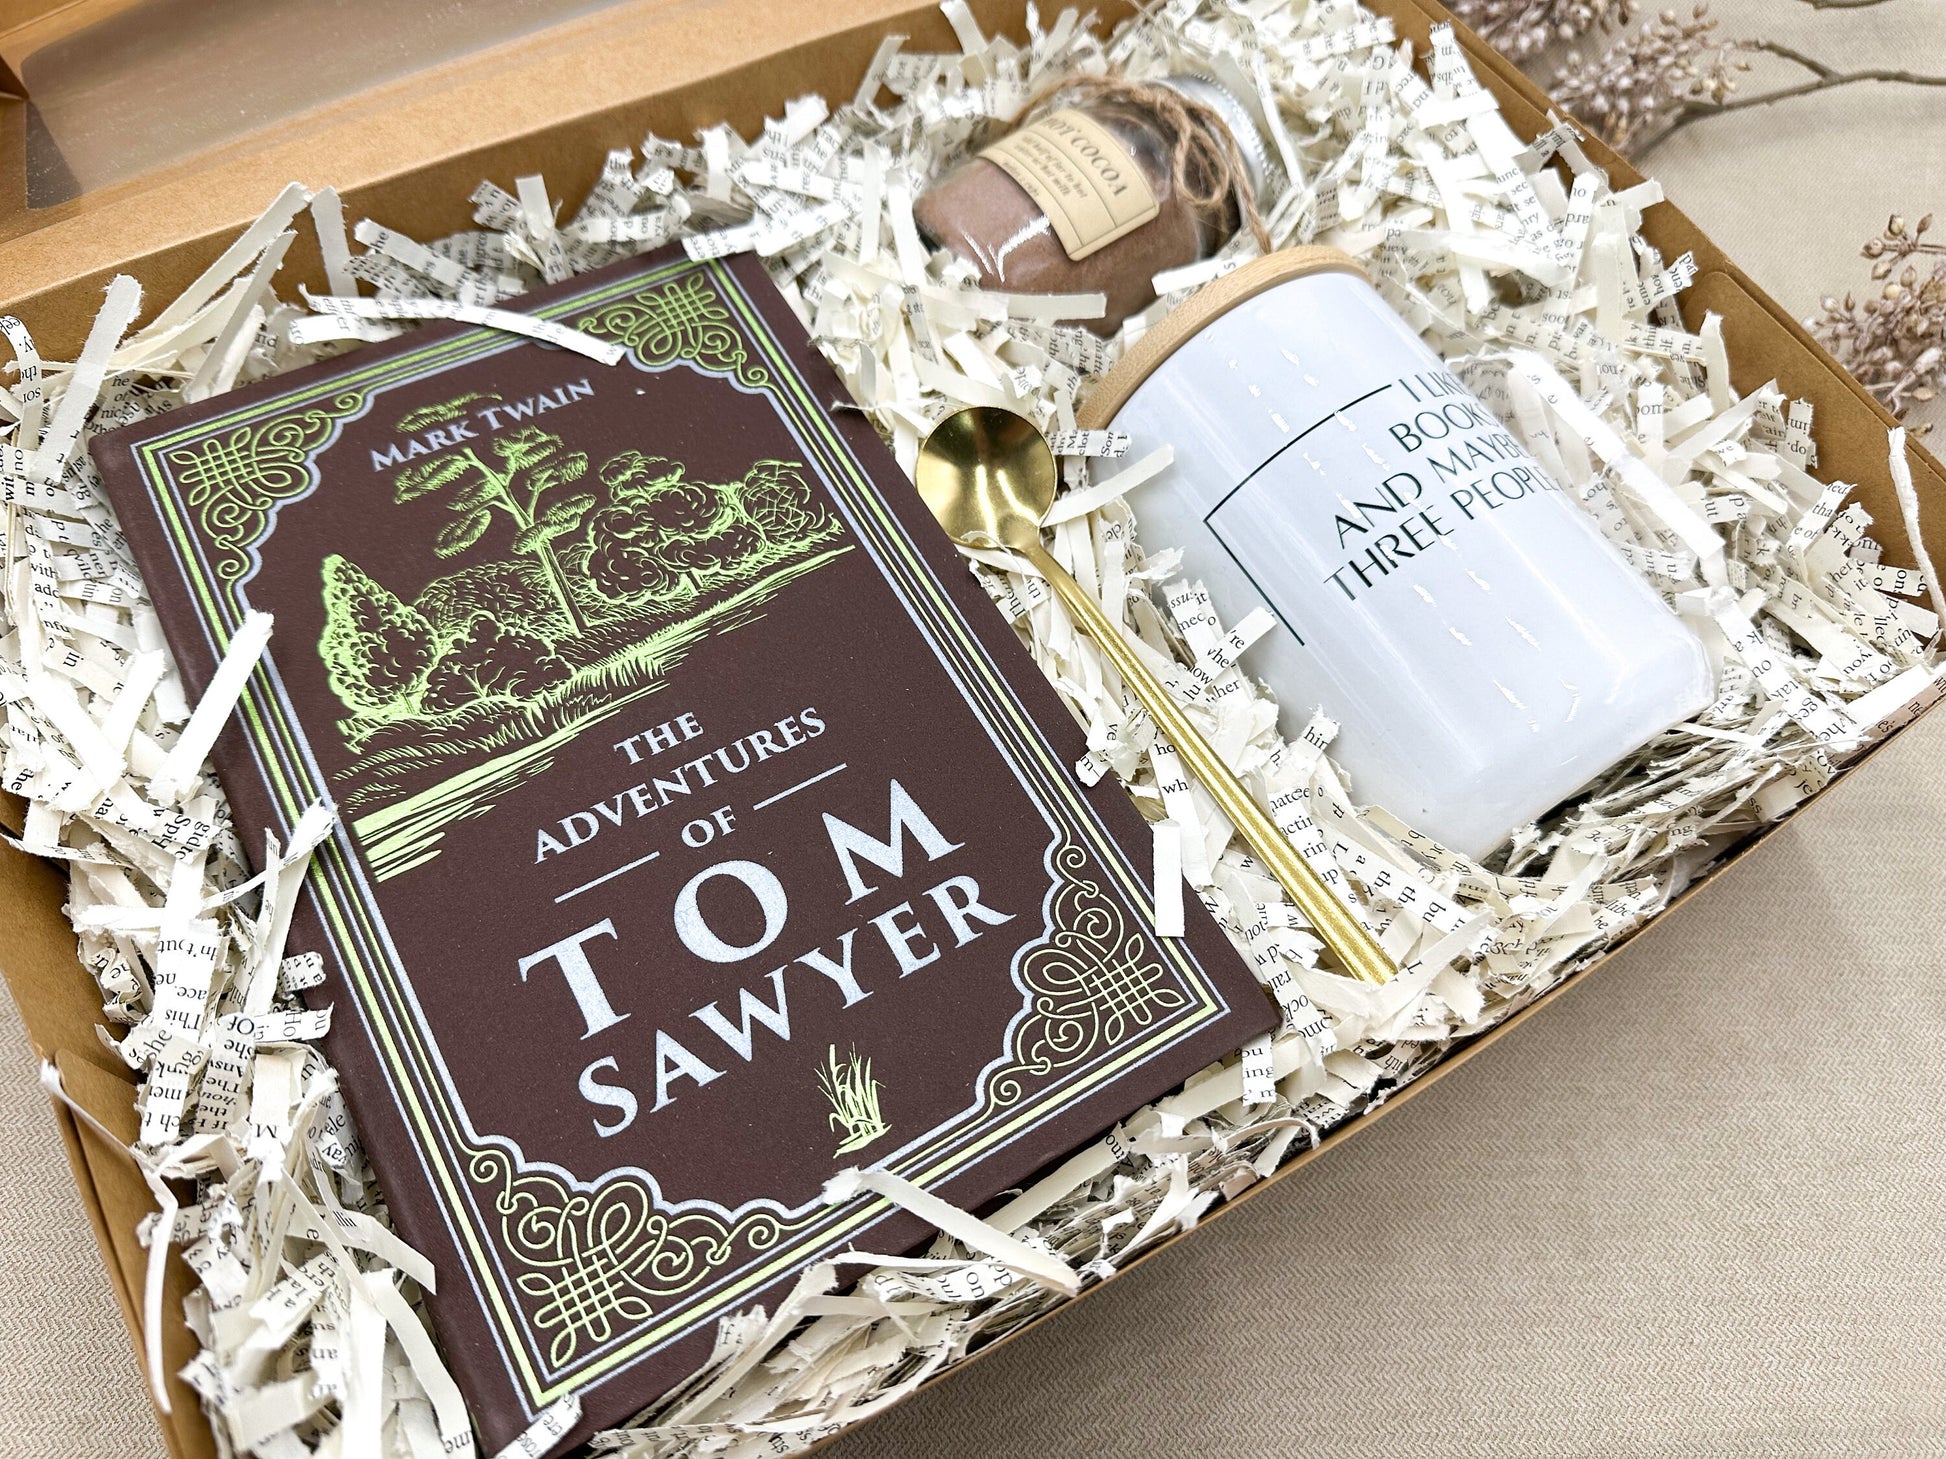 Classic Book, Christmas Gift Idea, Book Gift Idea, Book Lover Gift Box, Tom Sawyer